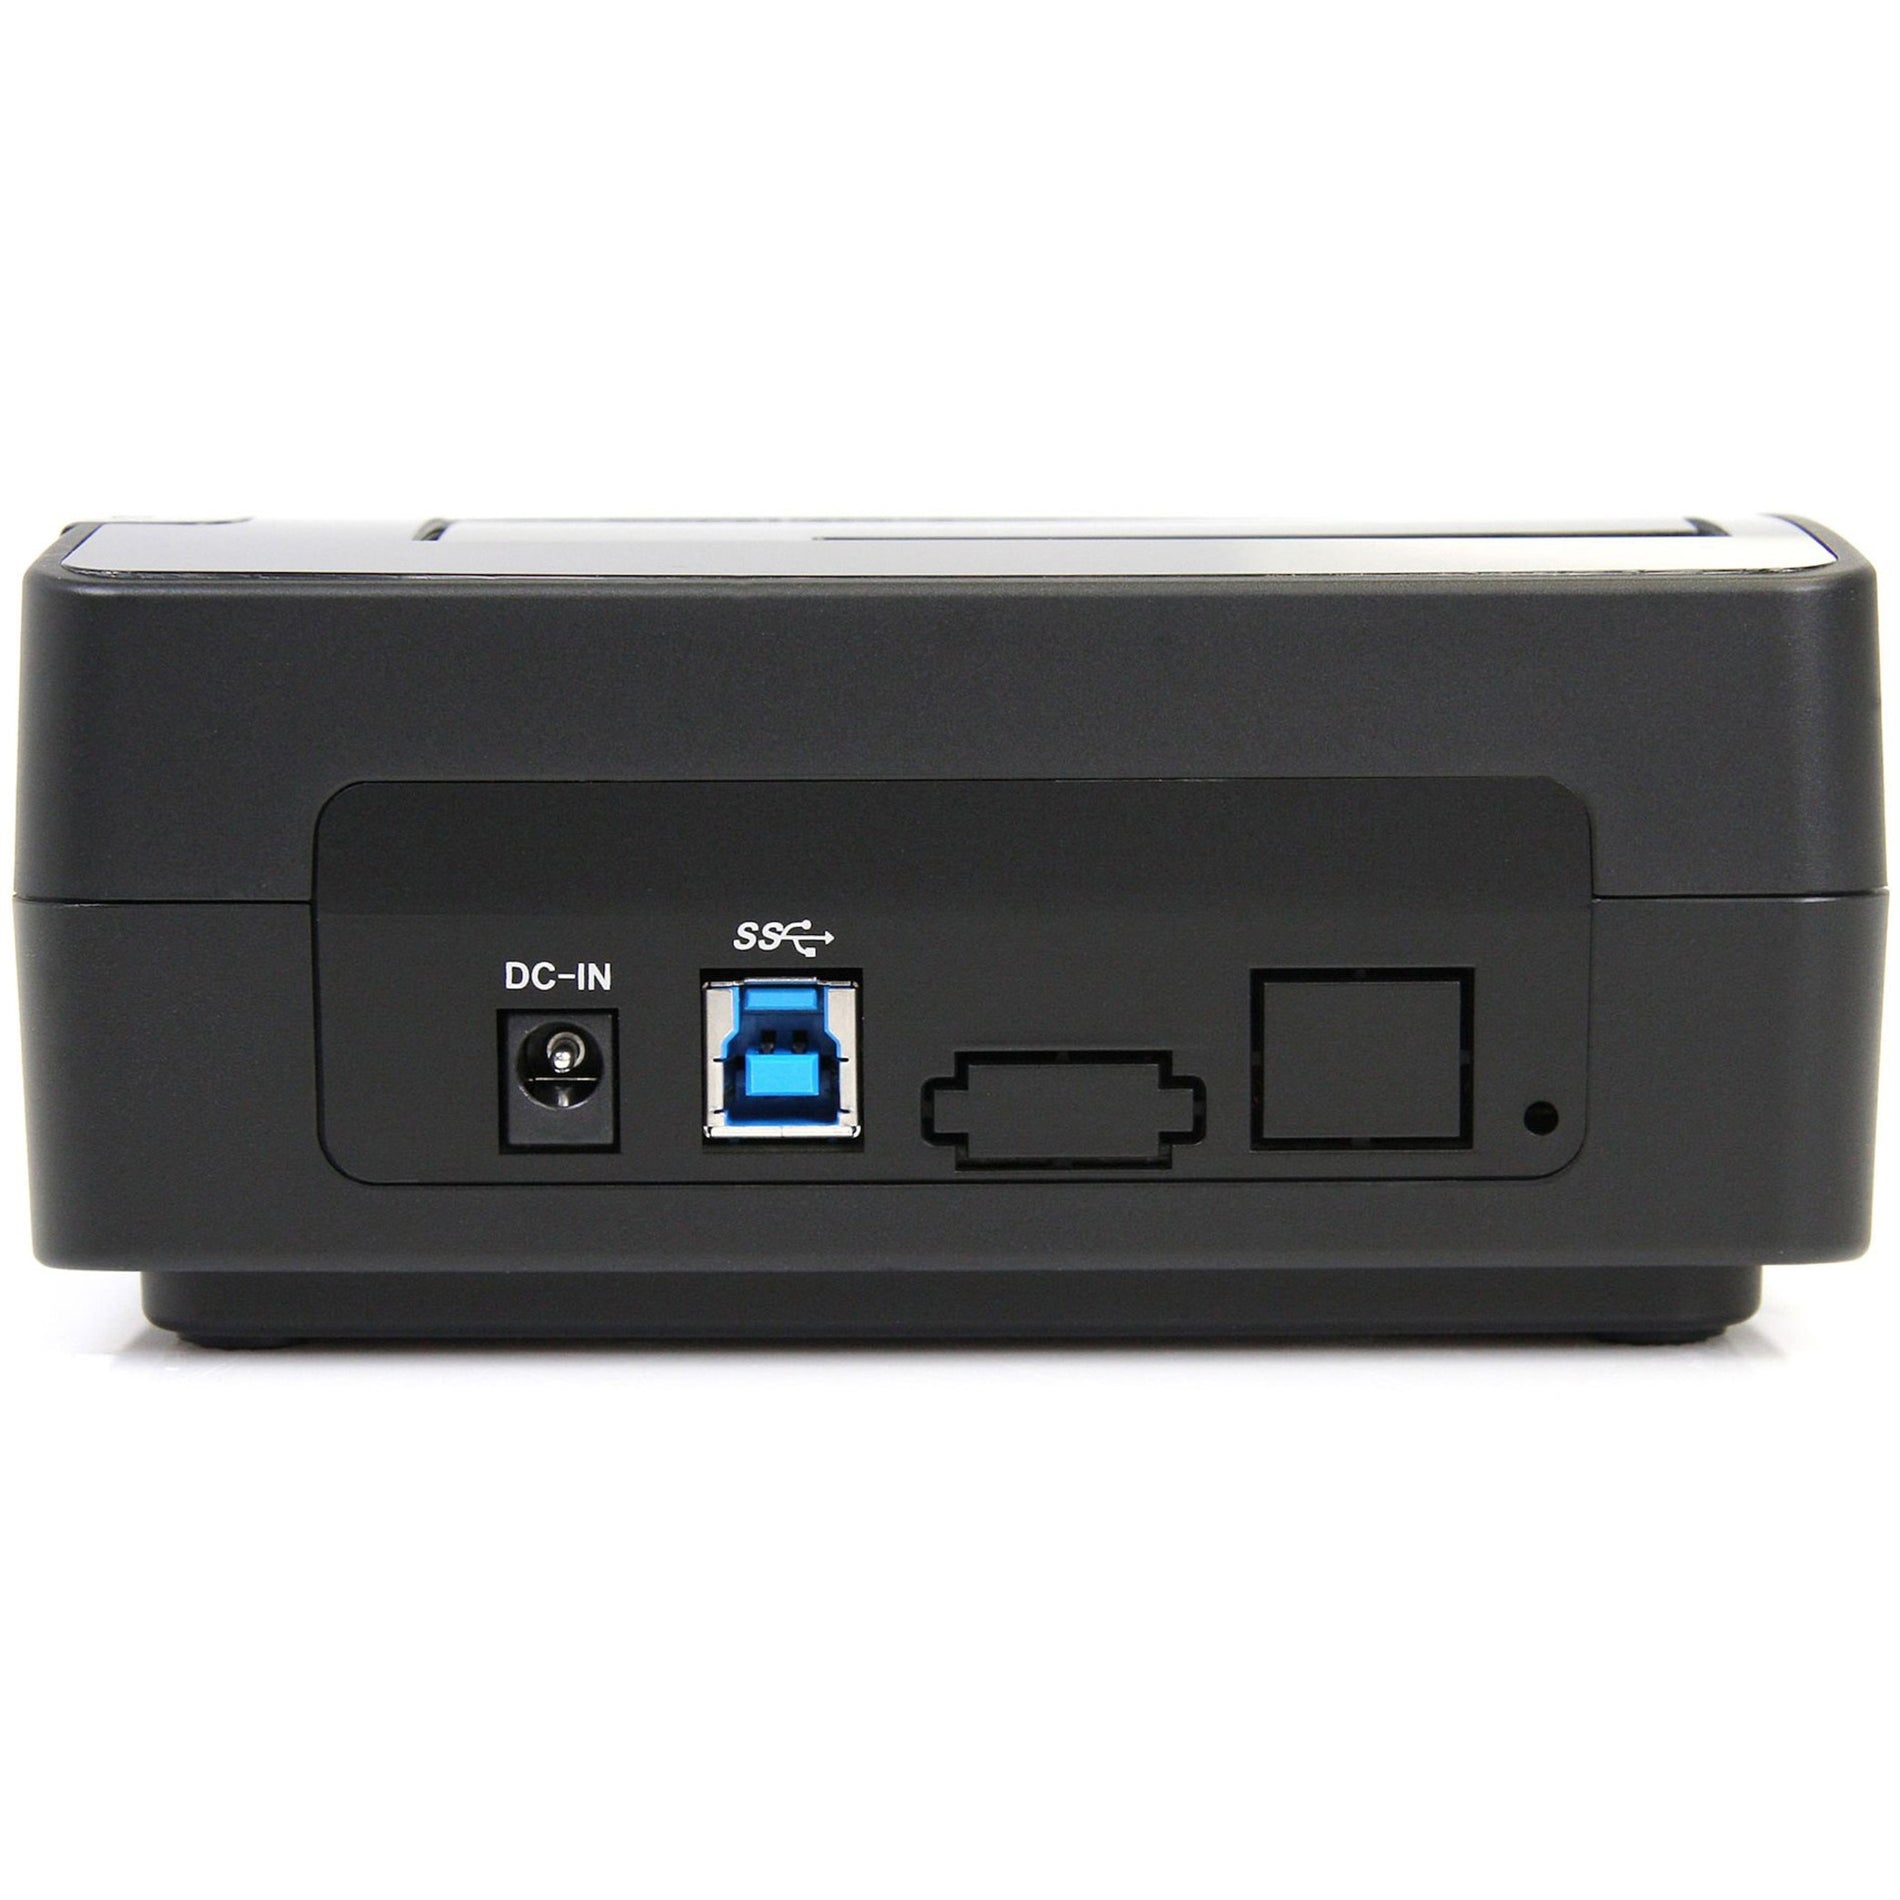 StarTech.com SATDOCKU3S USB 3.0 SATA Hard Drive Docking Station, Fast Access for External Storage